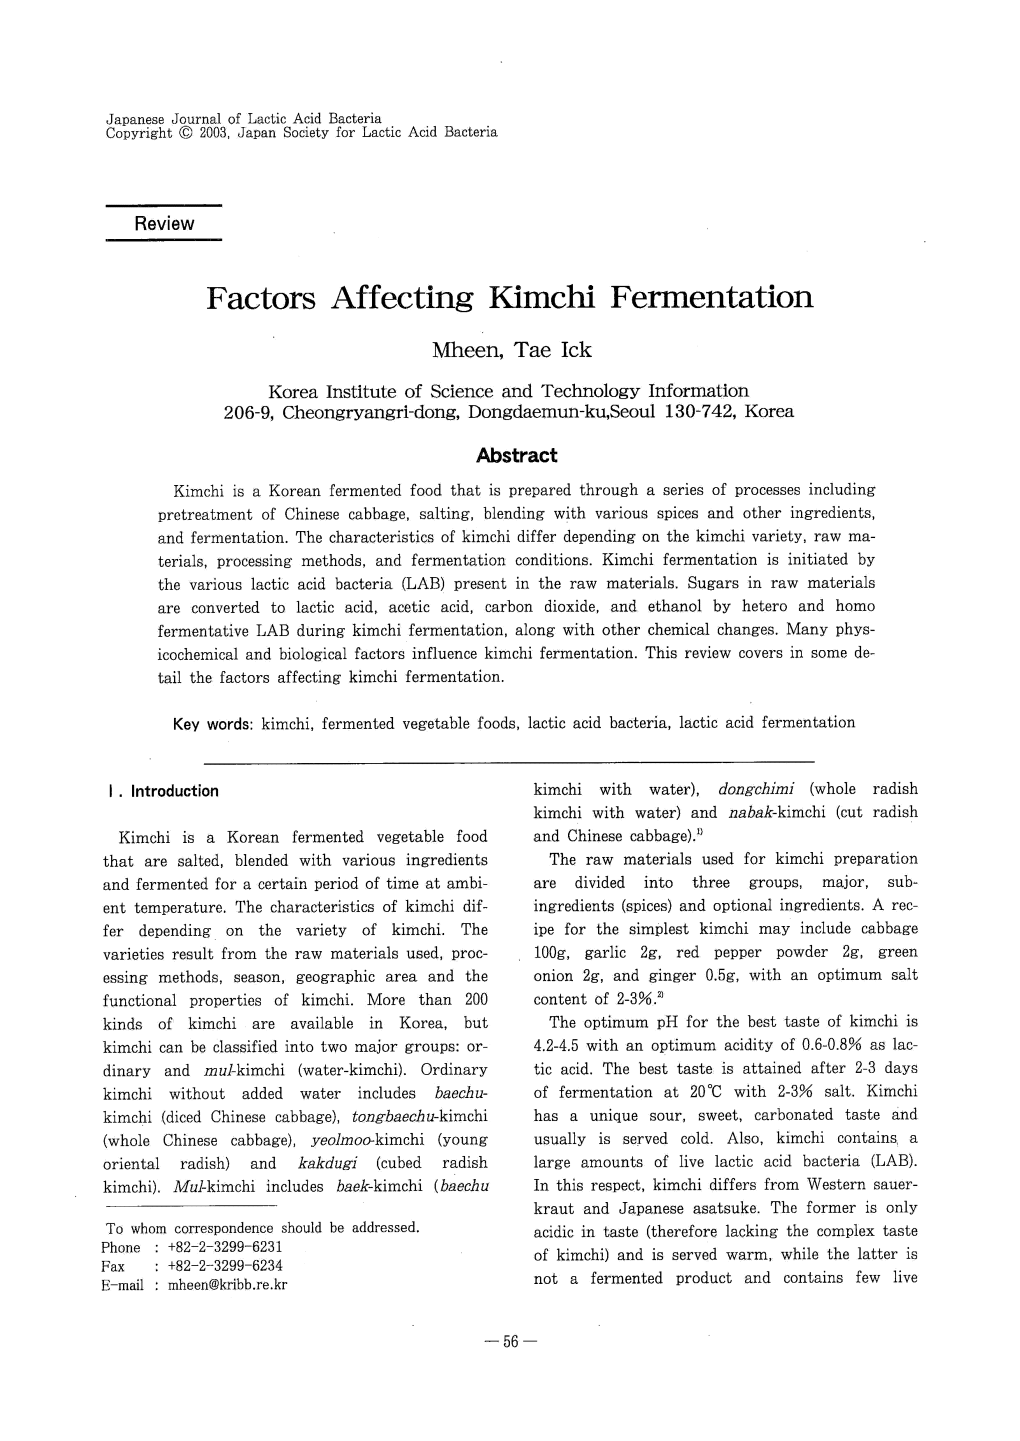 Factors Affecting Kimchi Fermentation